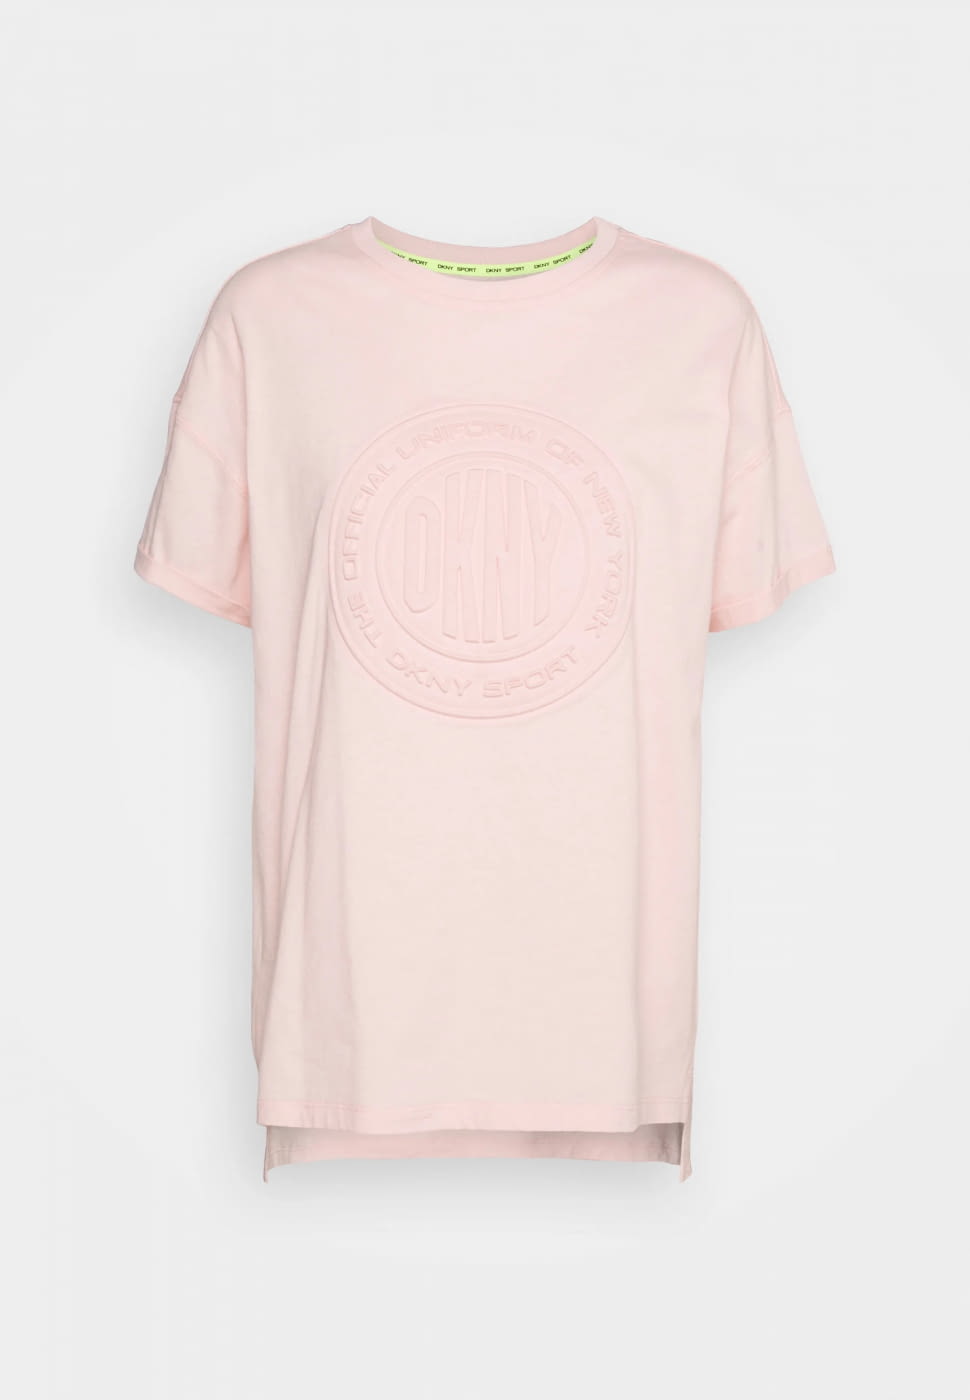 DKNY camiseta rosa con logo en relieve